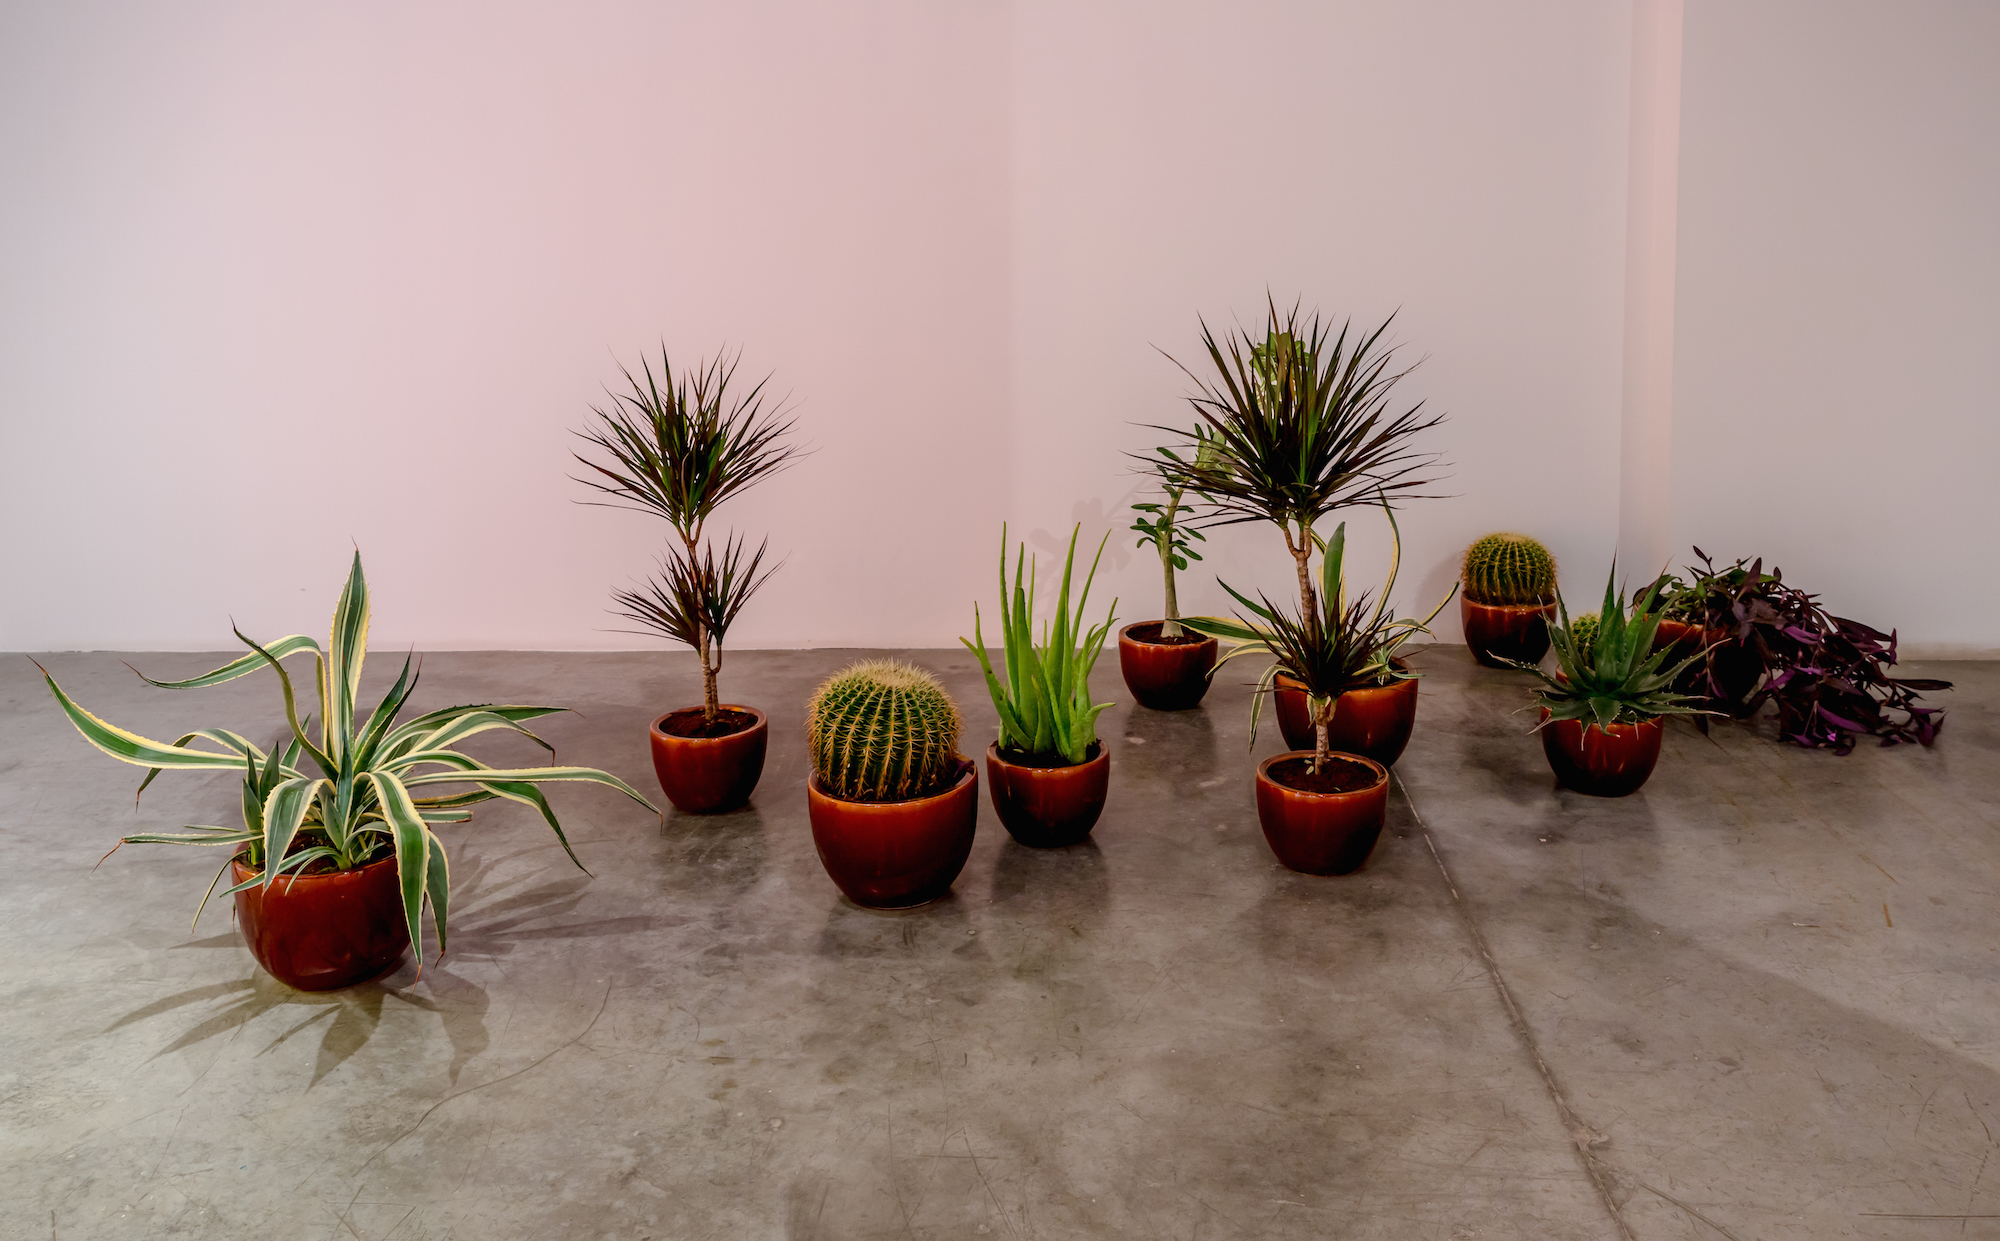  xxx, xx, x 2016  Agave parryi, Aloe vera, Golden barrel cacti, Agave americana, Mock azalea, Dracaena marginata, ceramic pots Dimensions variable 